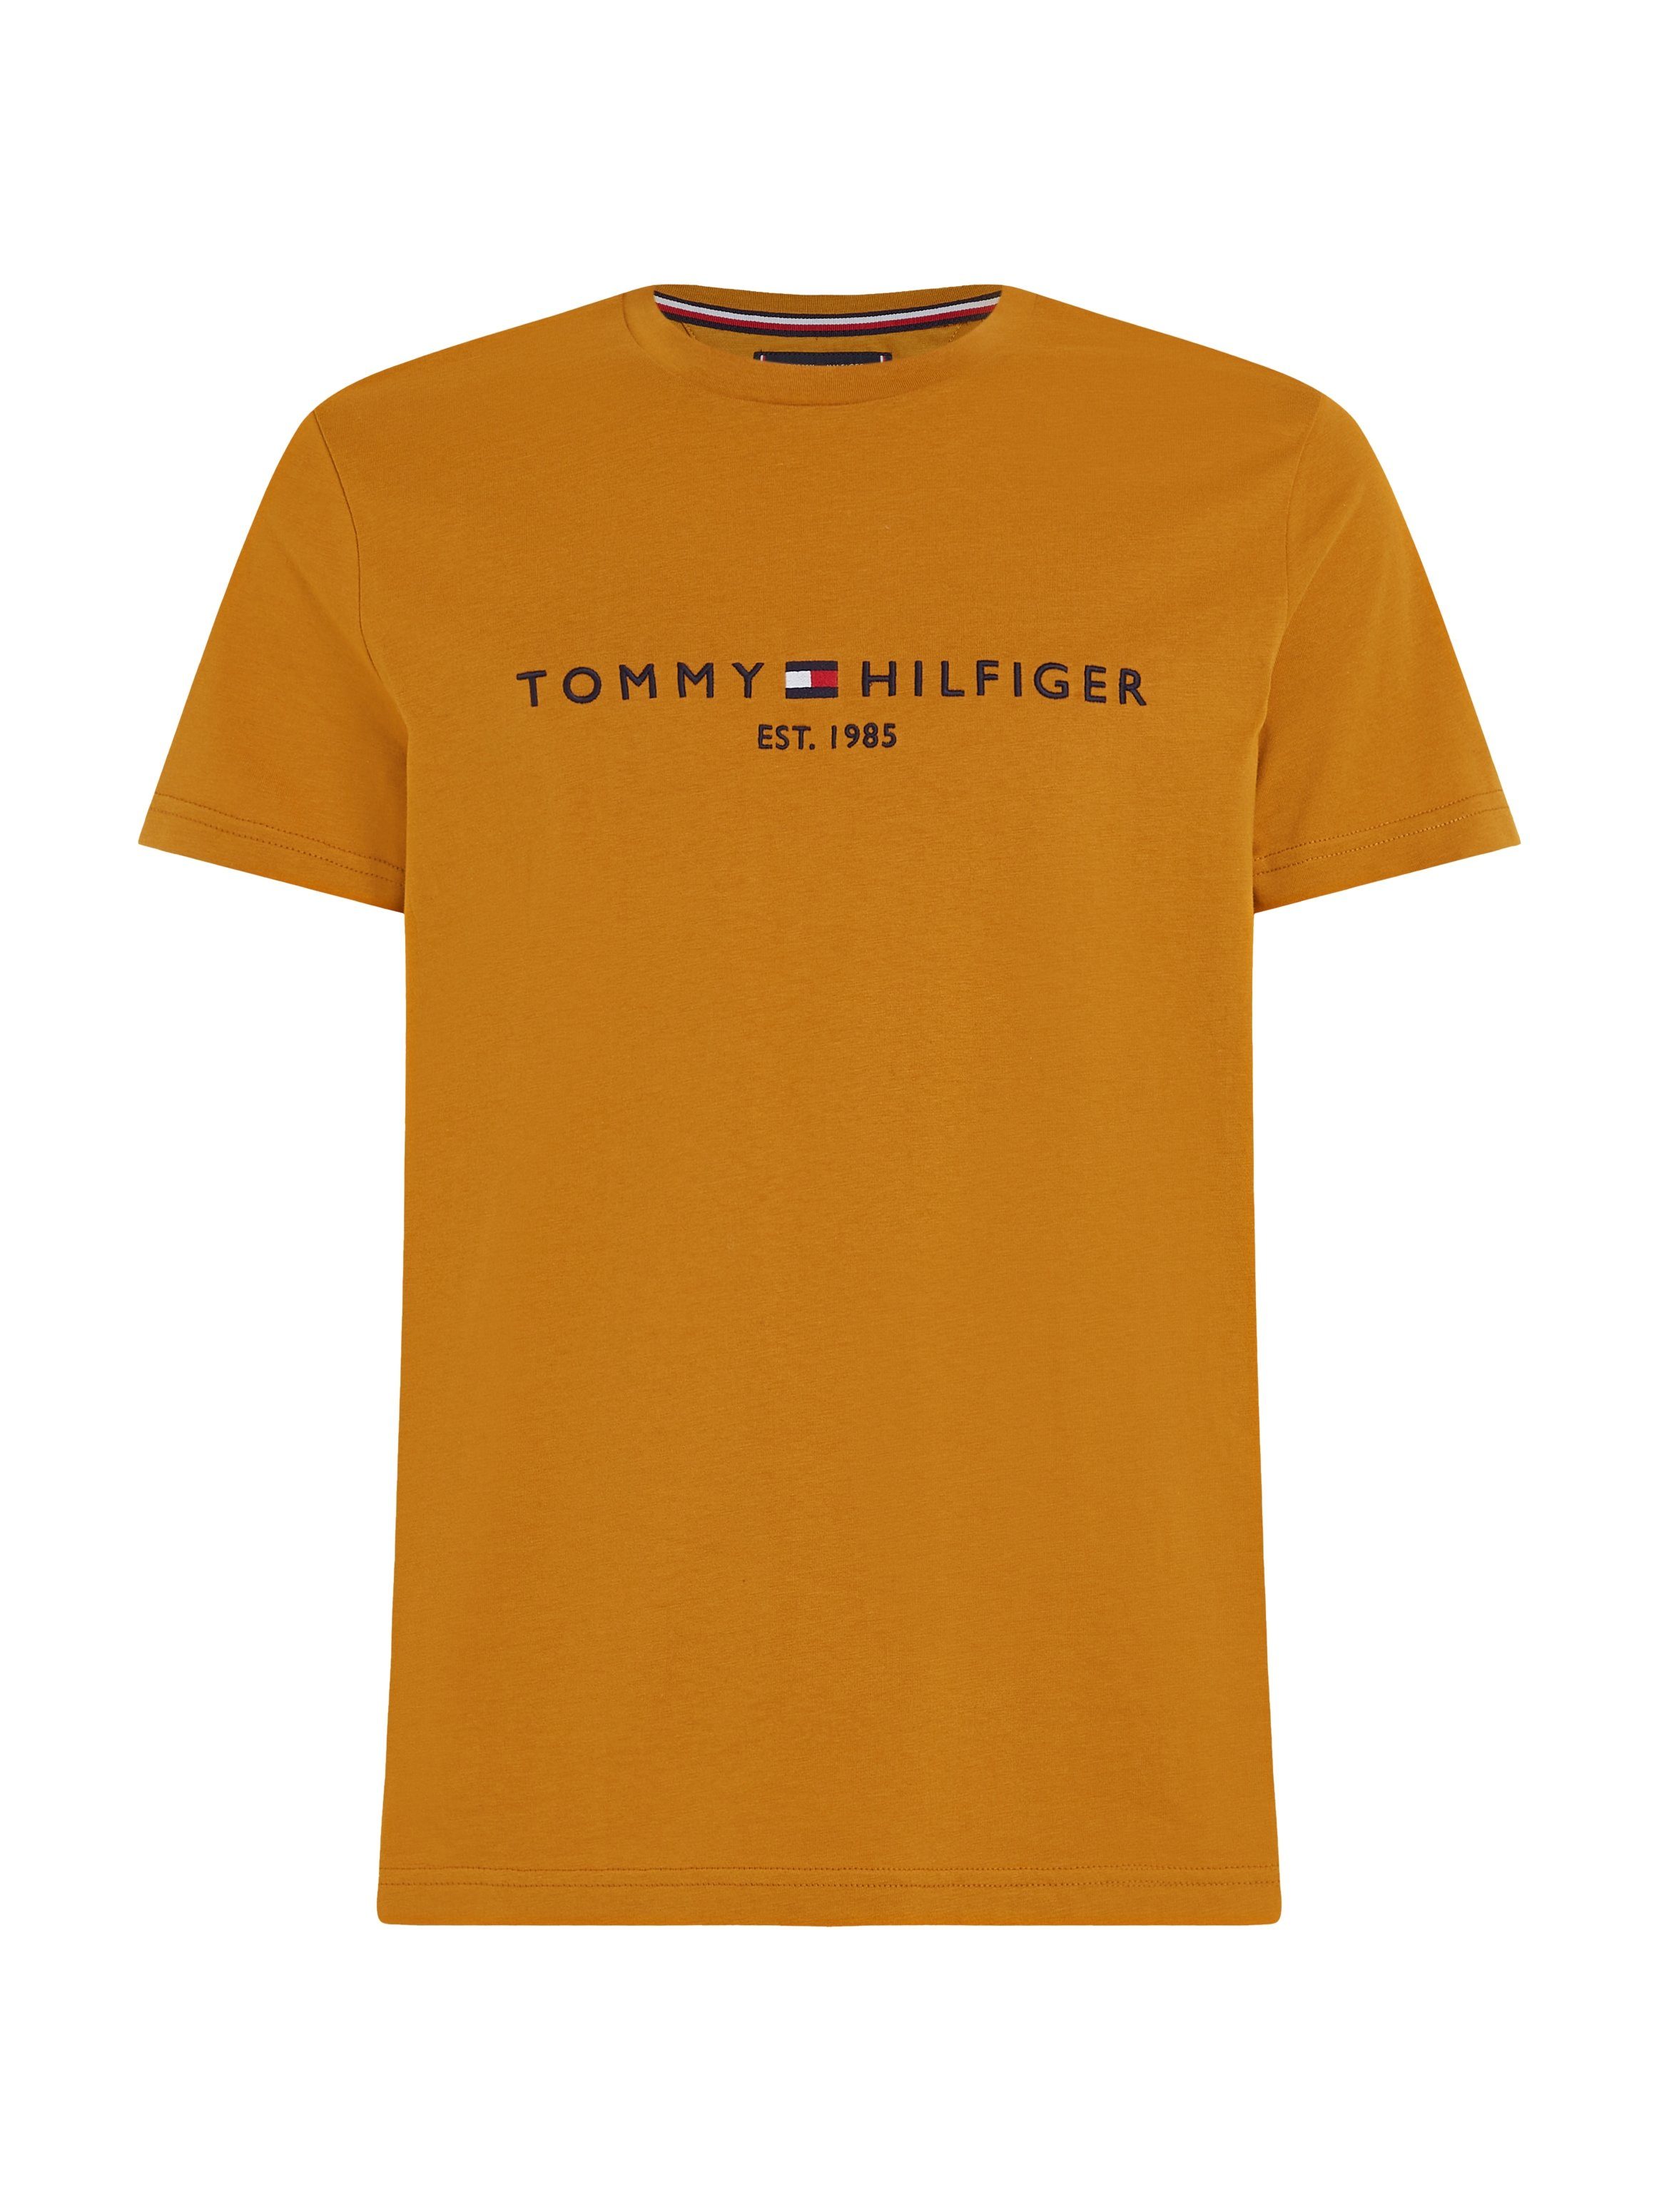 LOGO TEE Hilfiger TOMMY Crest T-Shirt Gold Tommy